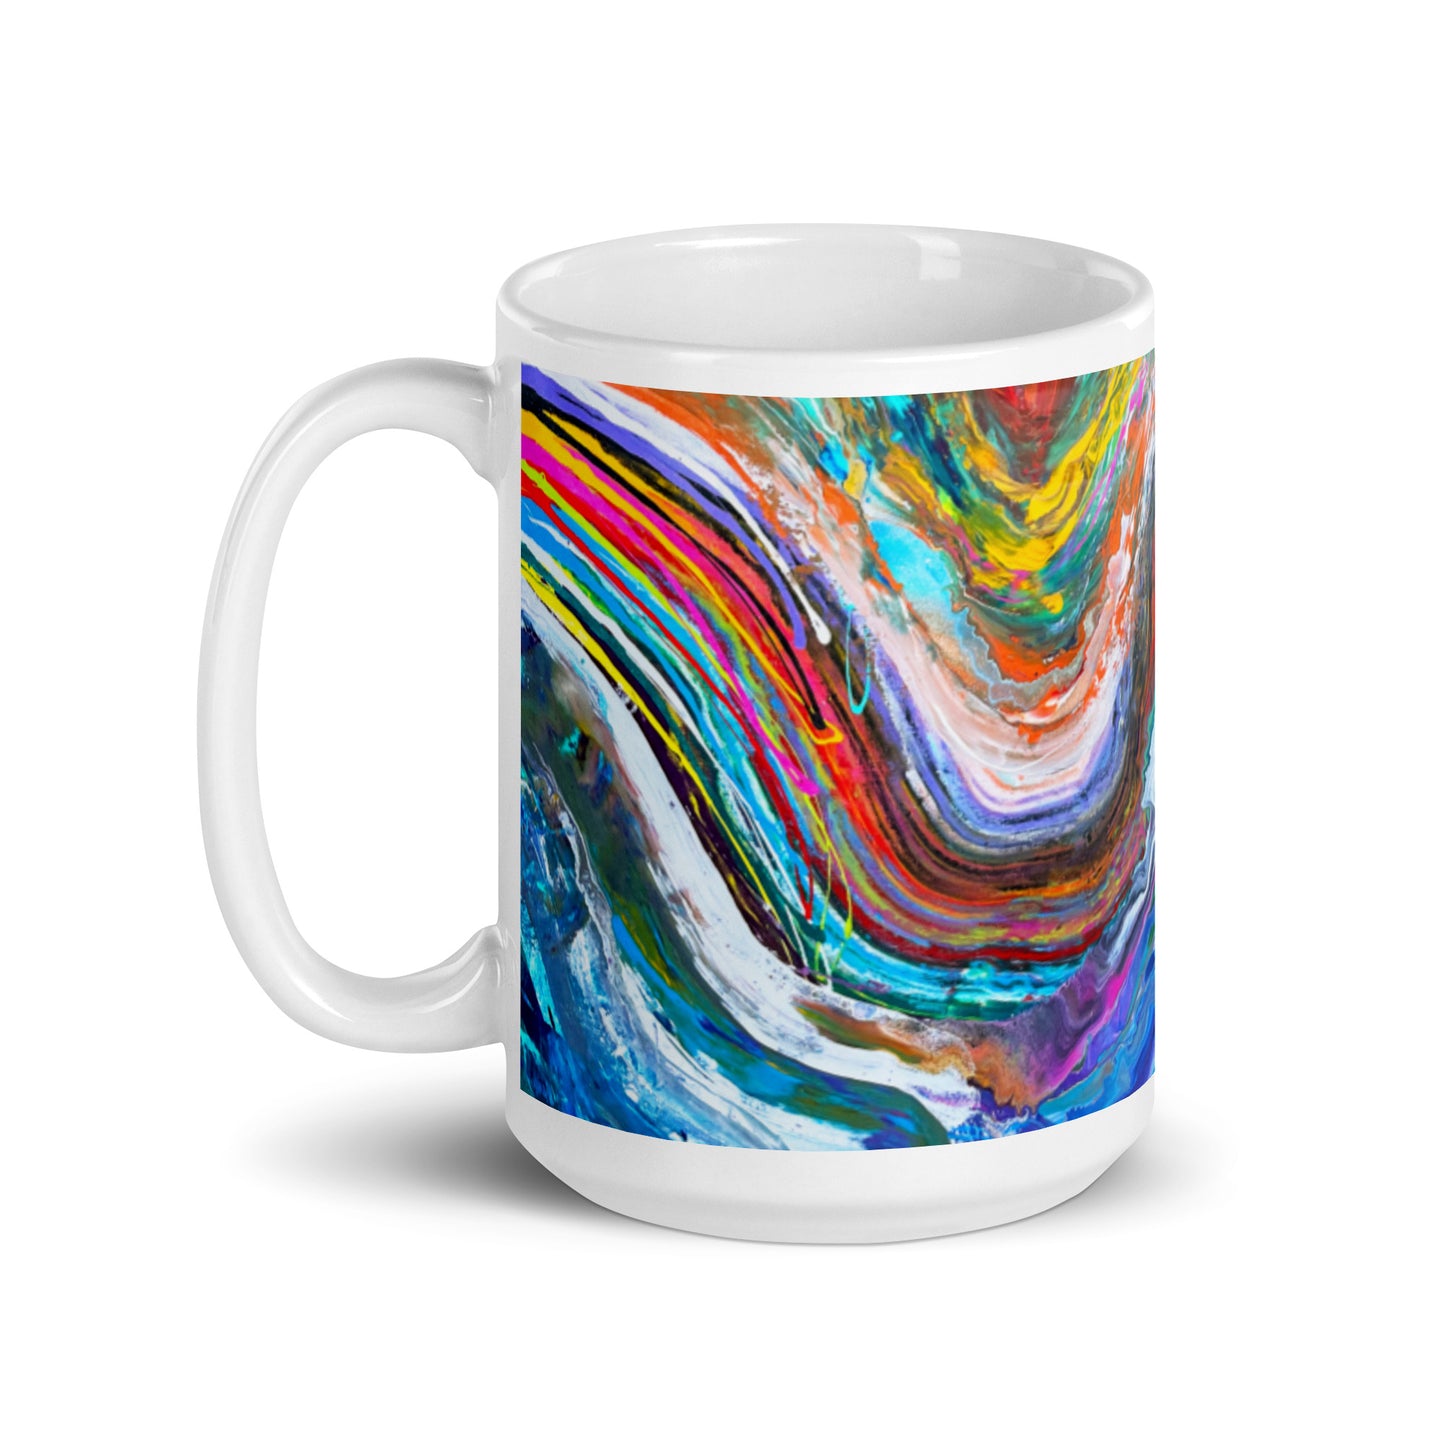 White glossy mug - Rainbow Wave design